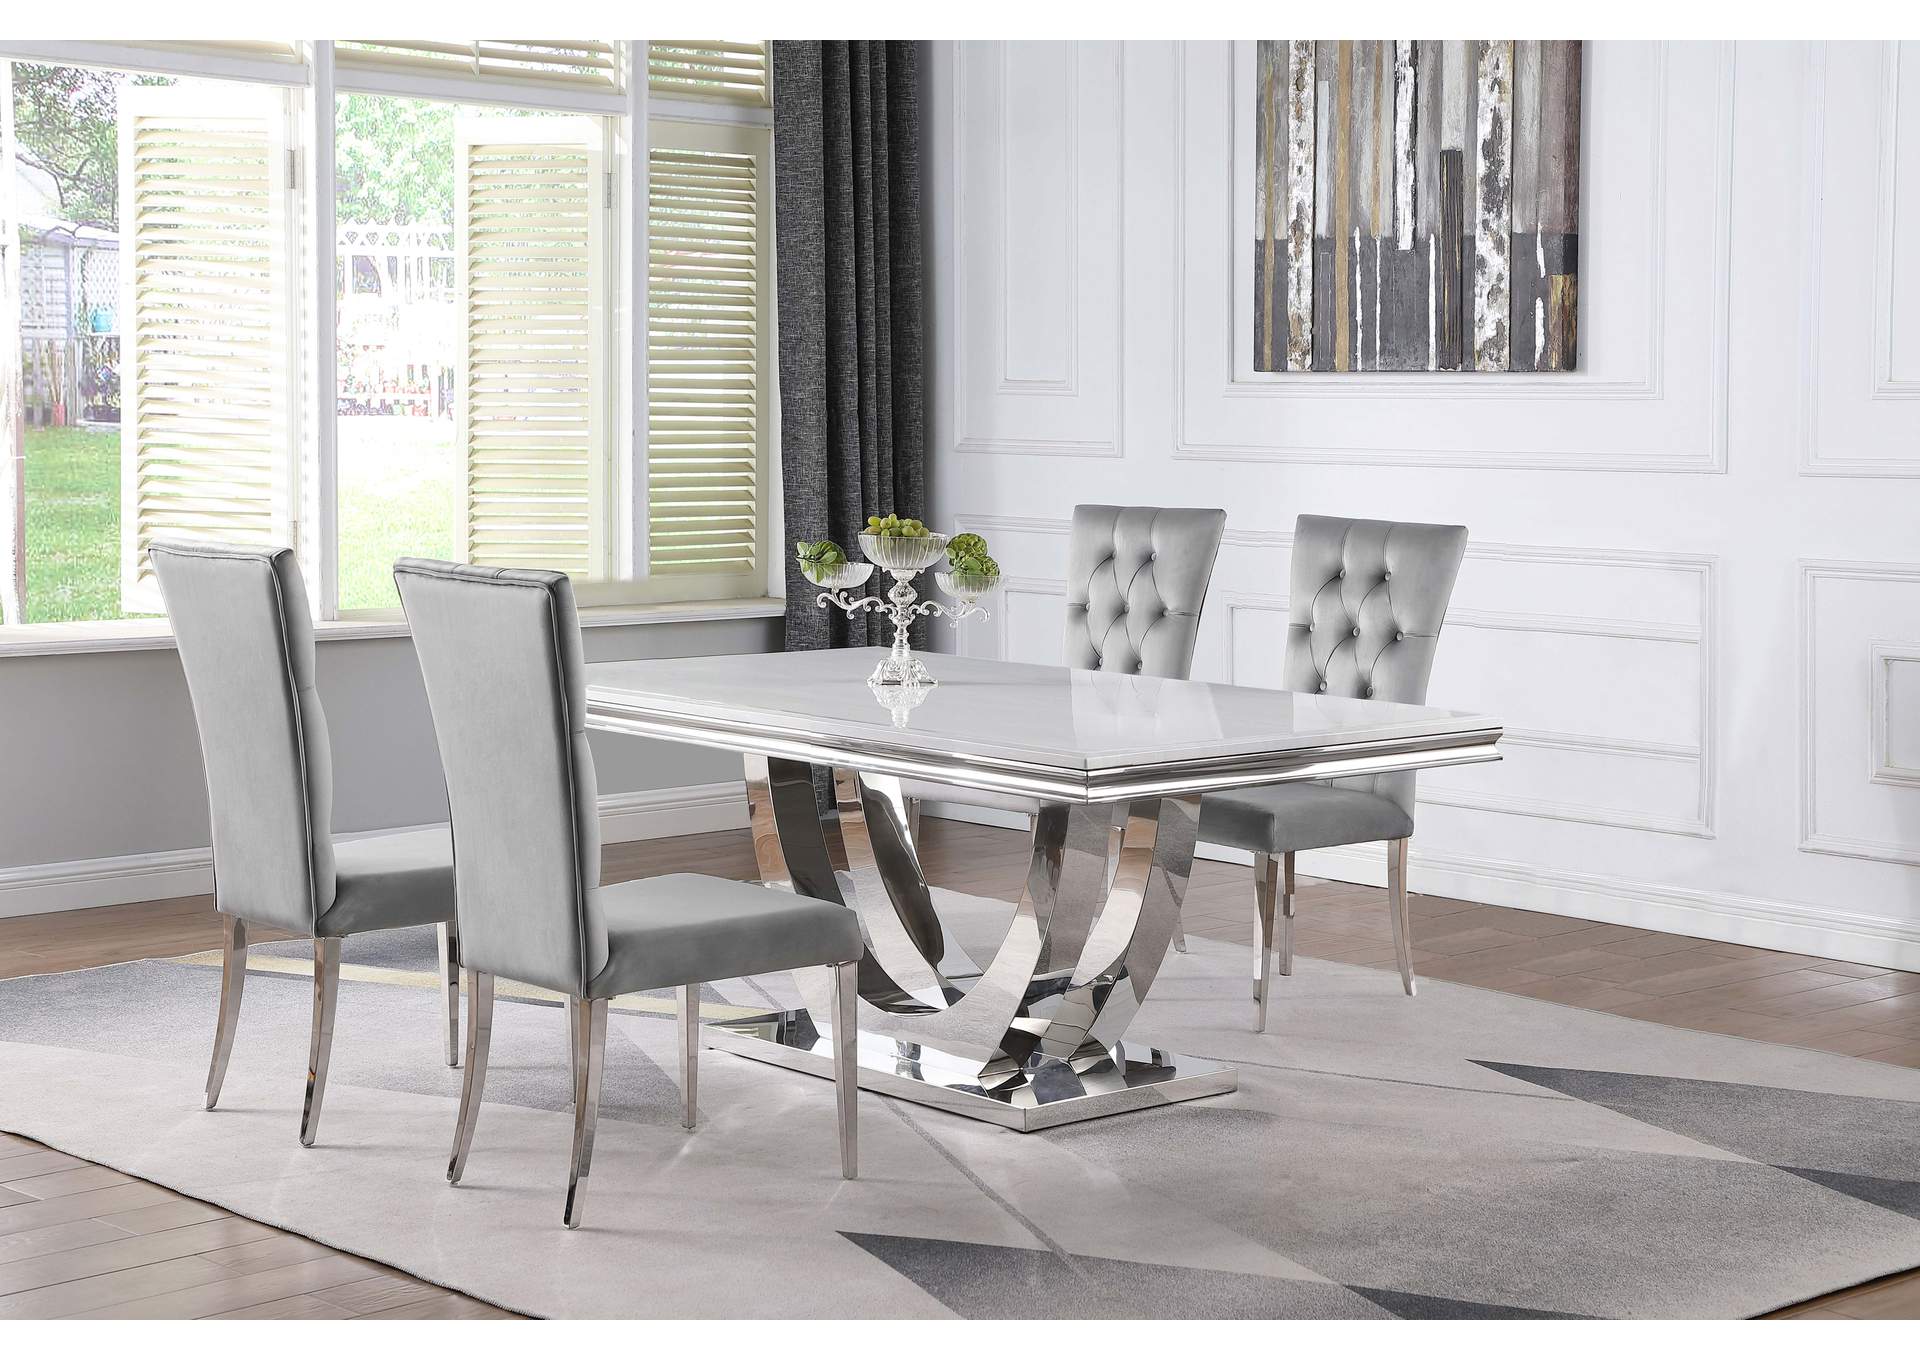 Kerwin 5-piece Dining Room Set Grey and Chrome,Coaster Furniture